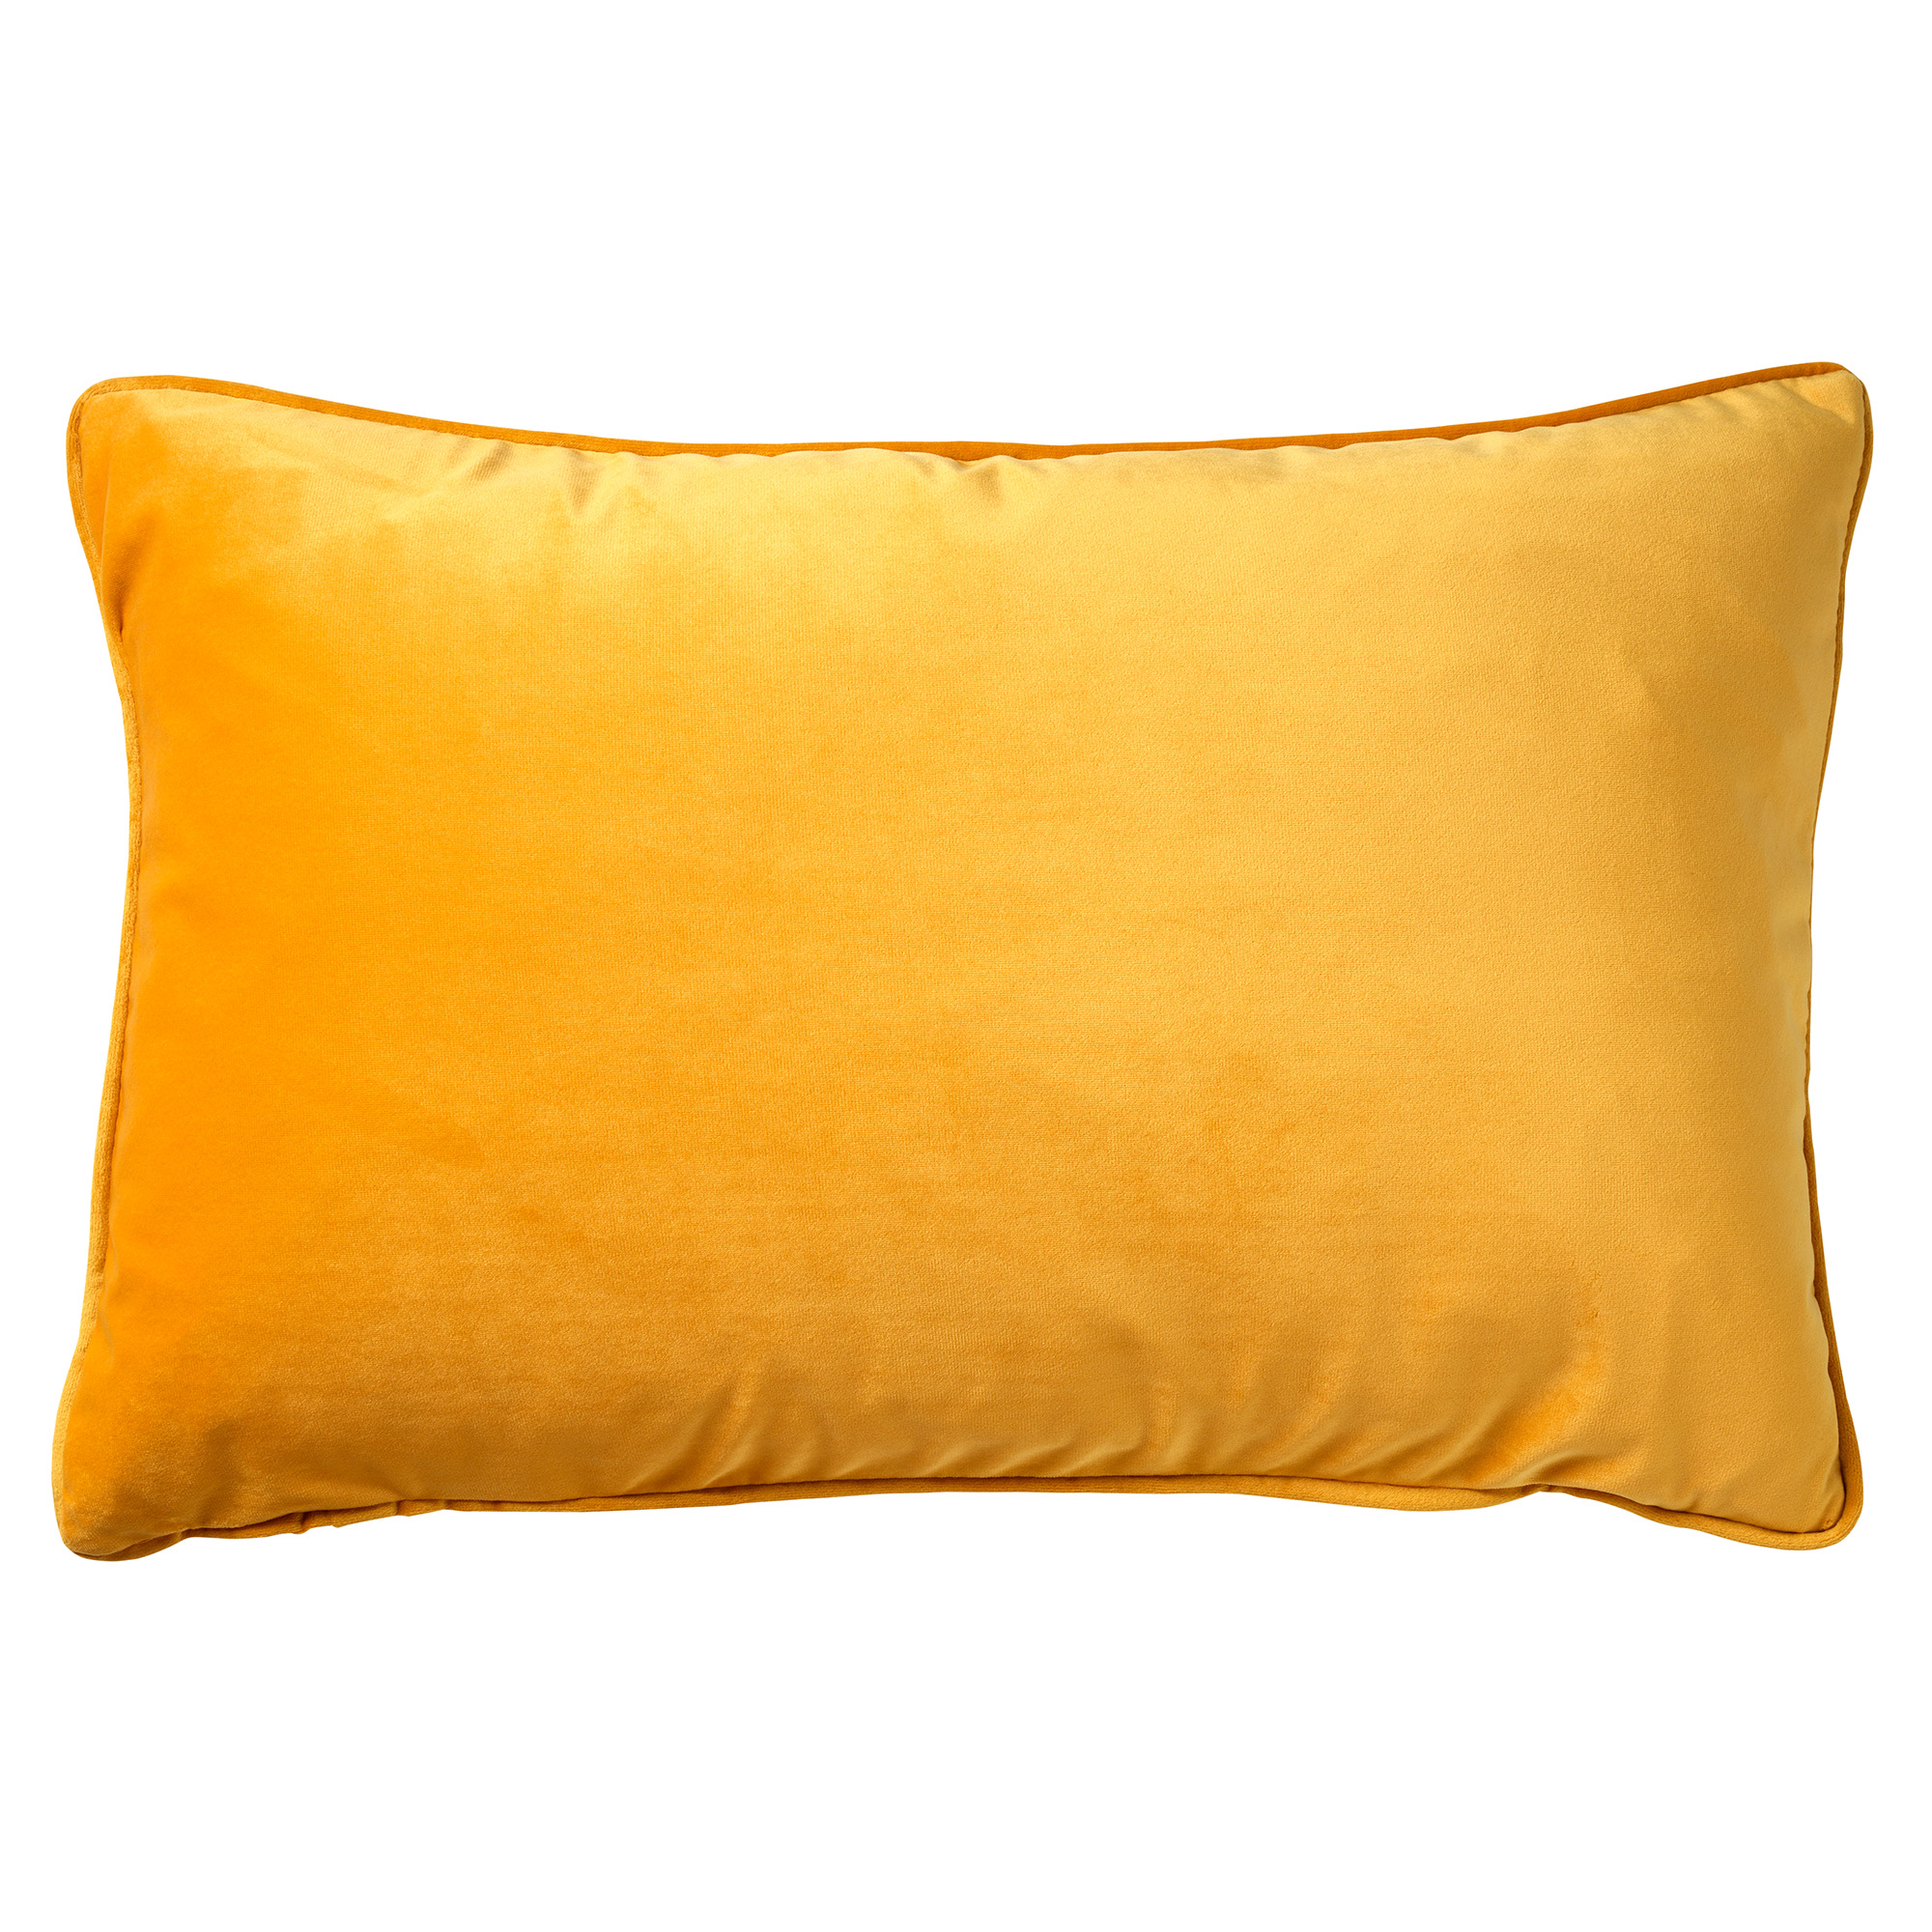 FINN - Kussenhoes velvet Golden Glow 40x60 cm - geel